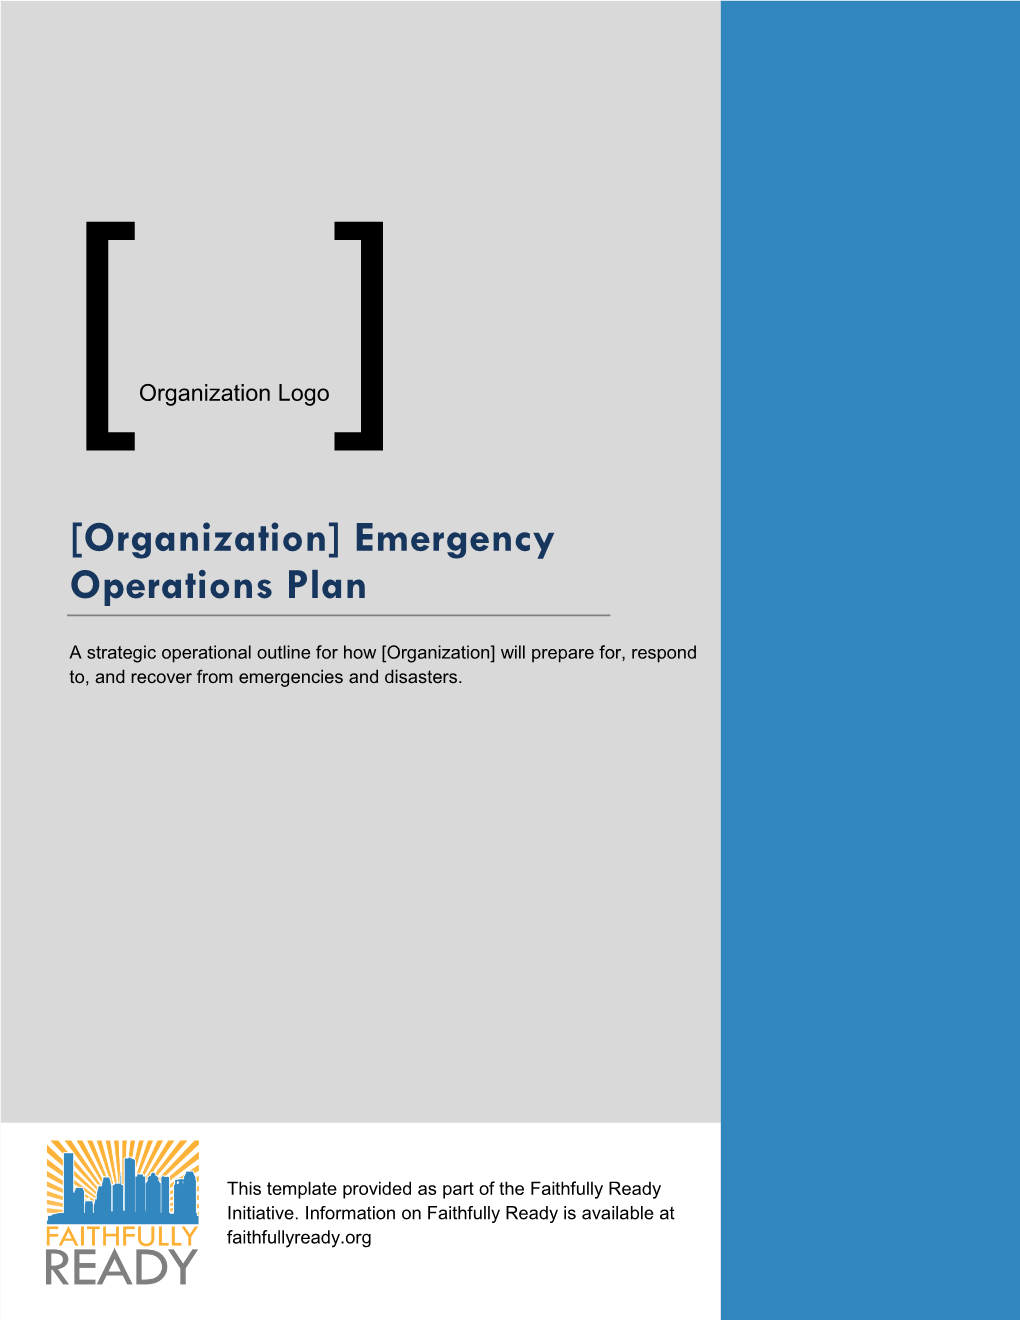 [Organization] Emergency Operations Plan